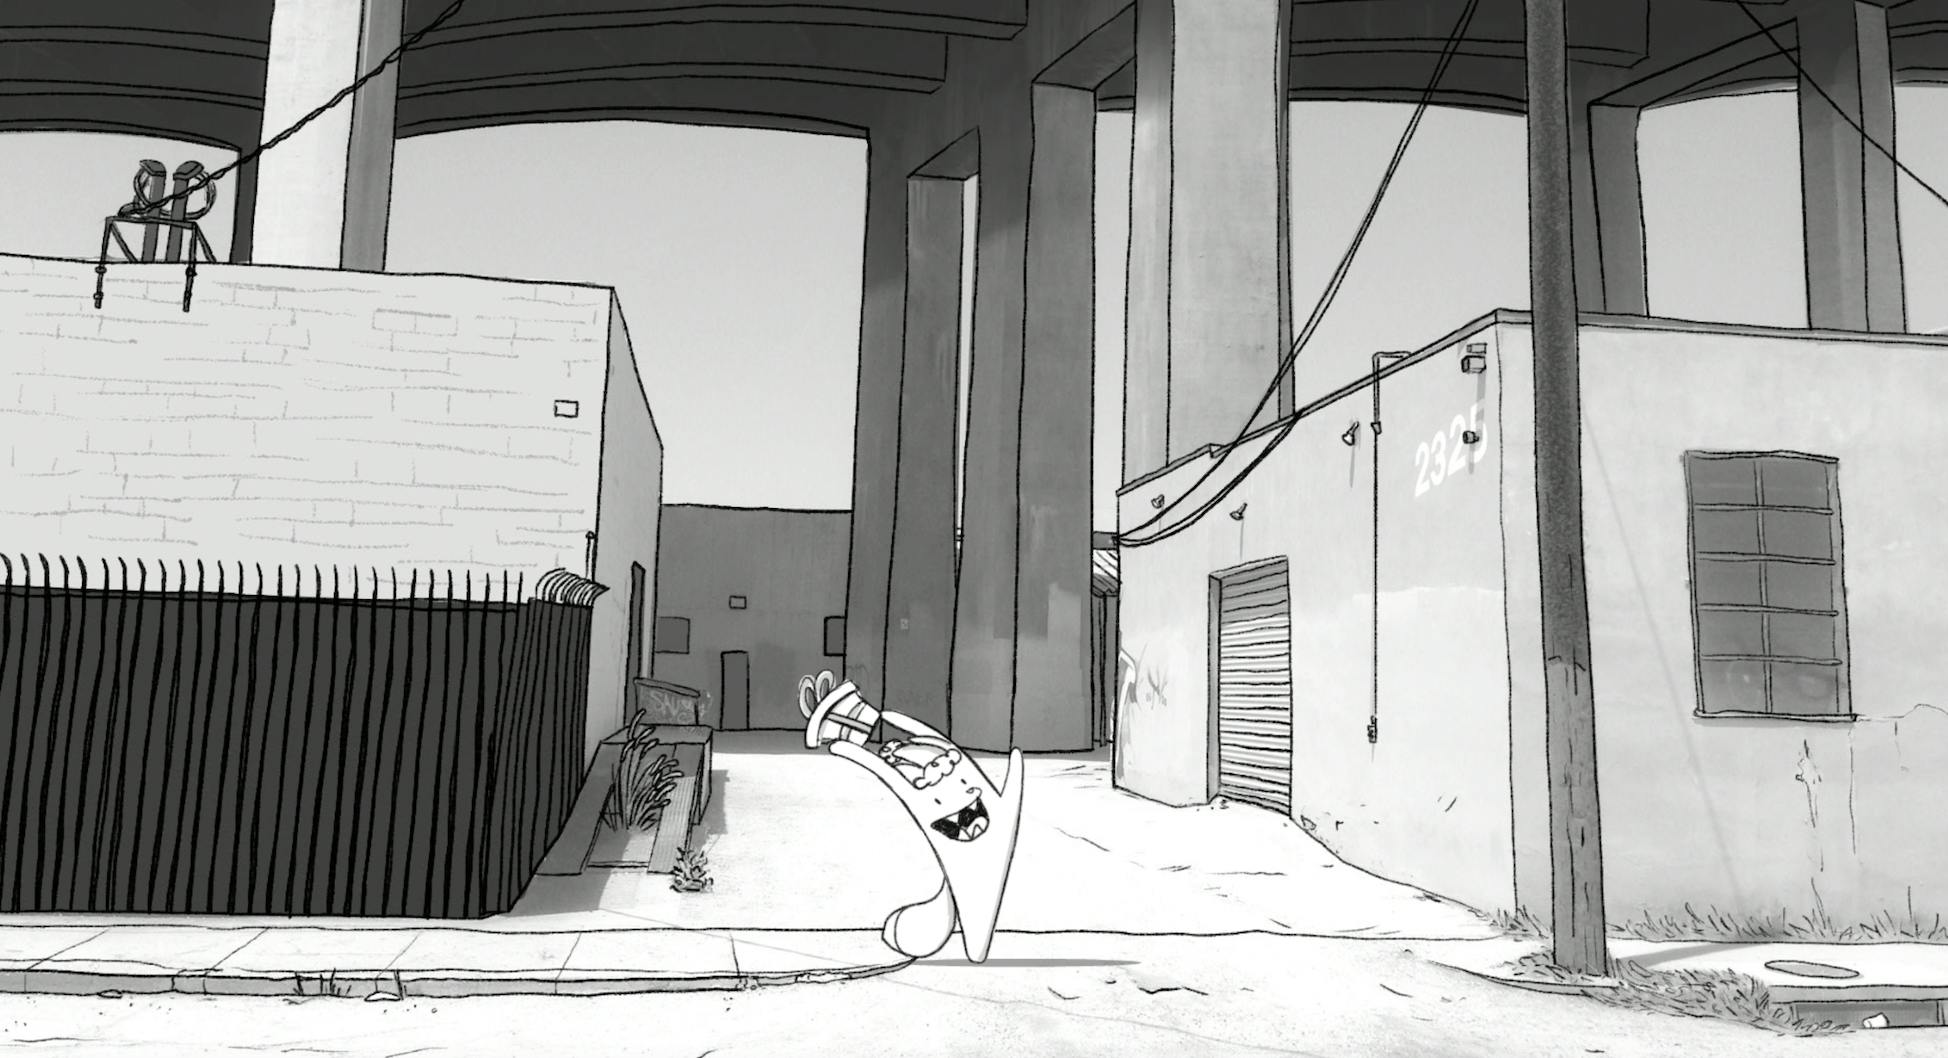 Cartoon character dancing in an industrial district